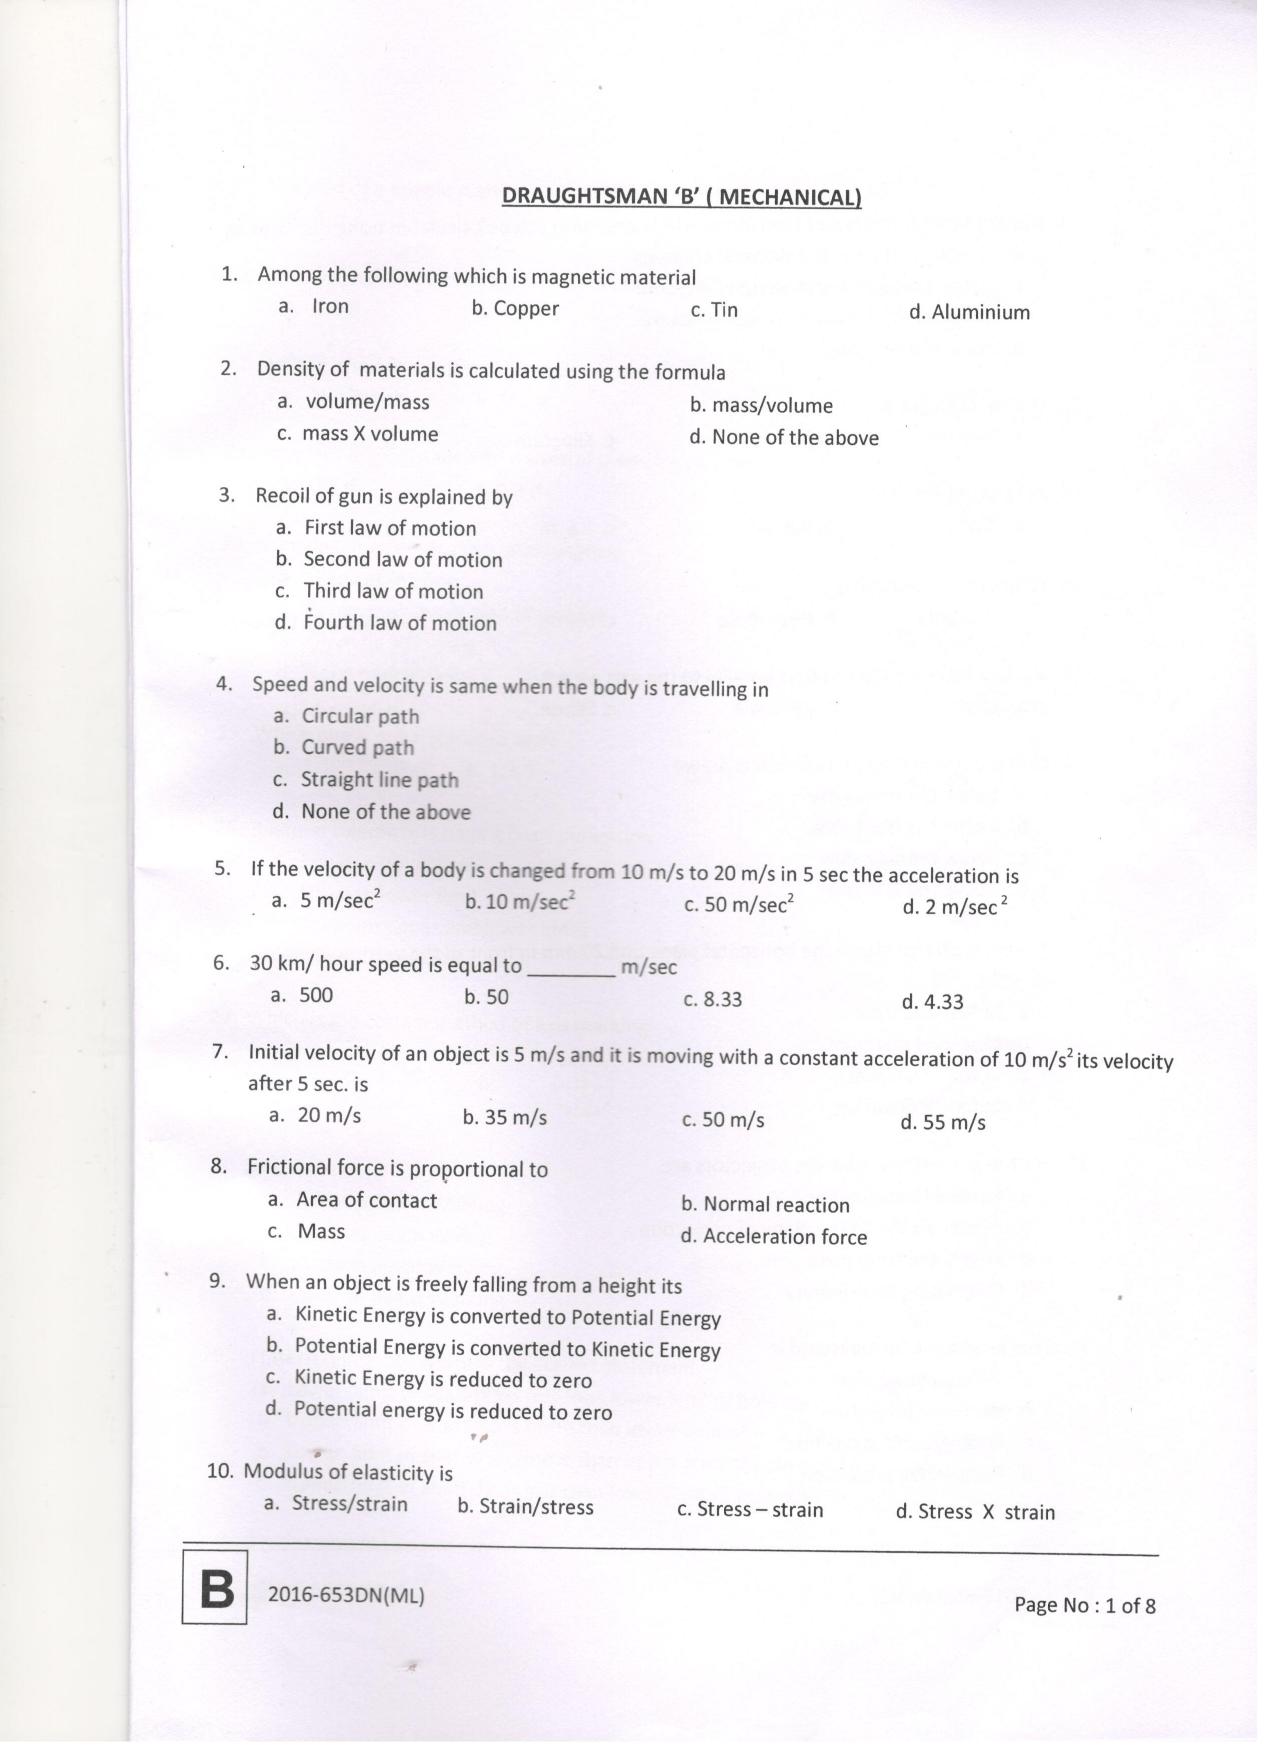 LPSC Draftsman ‘B’ (Mechanical) 2016 Question Paper - Page 3